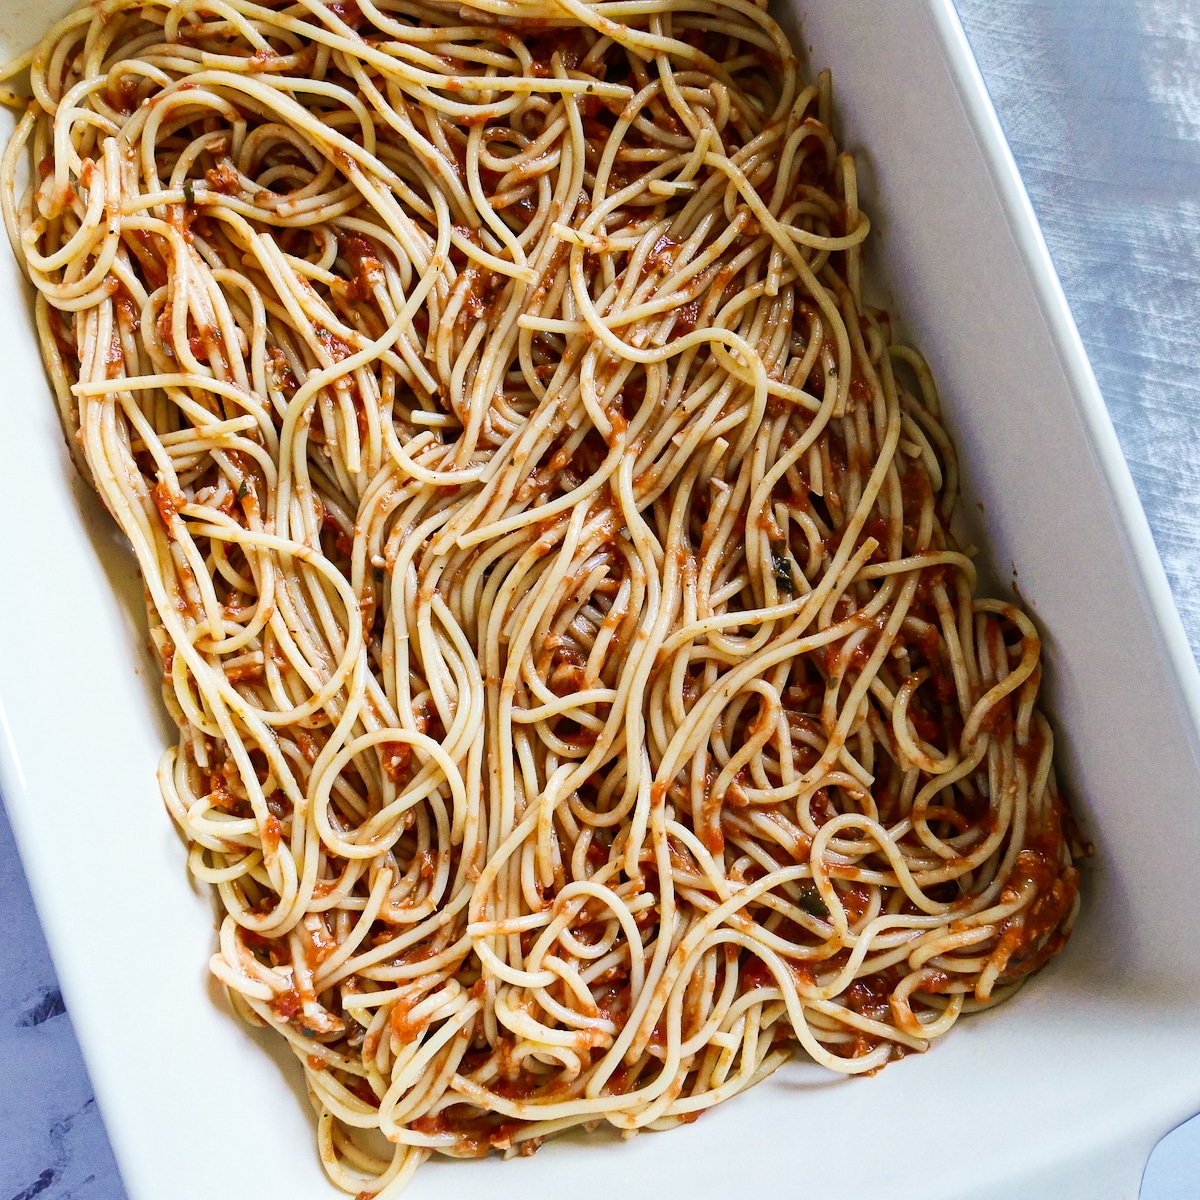 Spaghetti bake ingredients spread into a prepared baking dish.